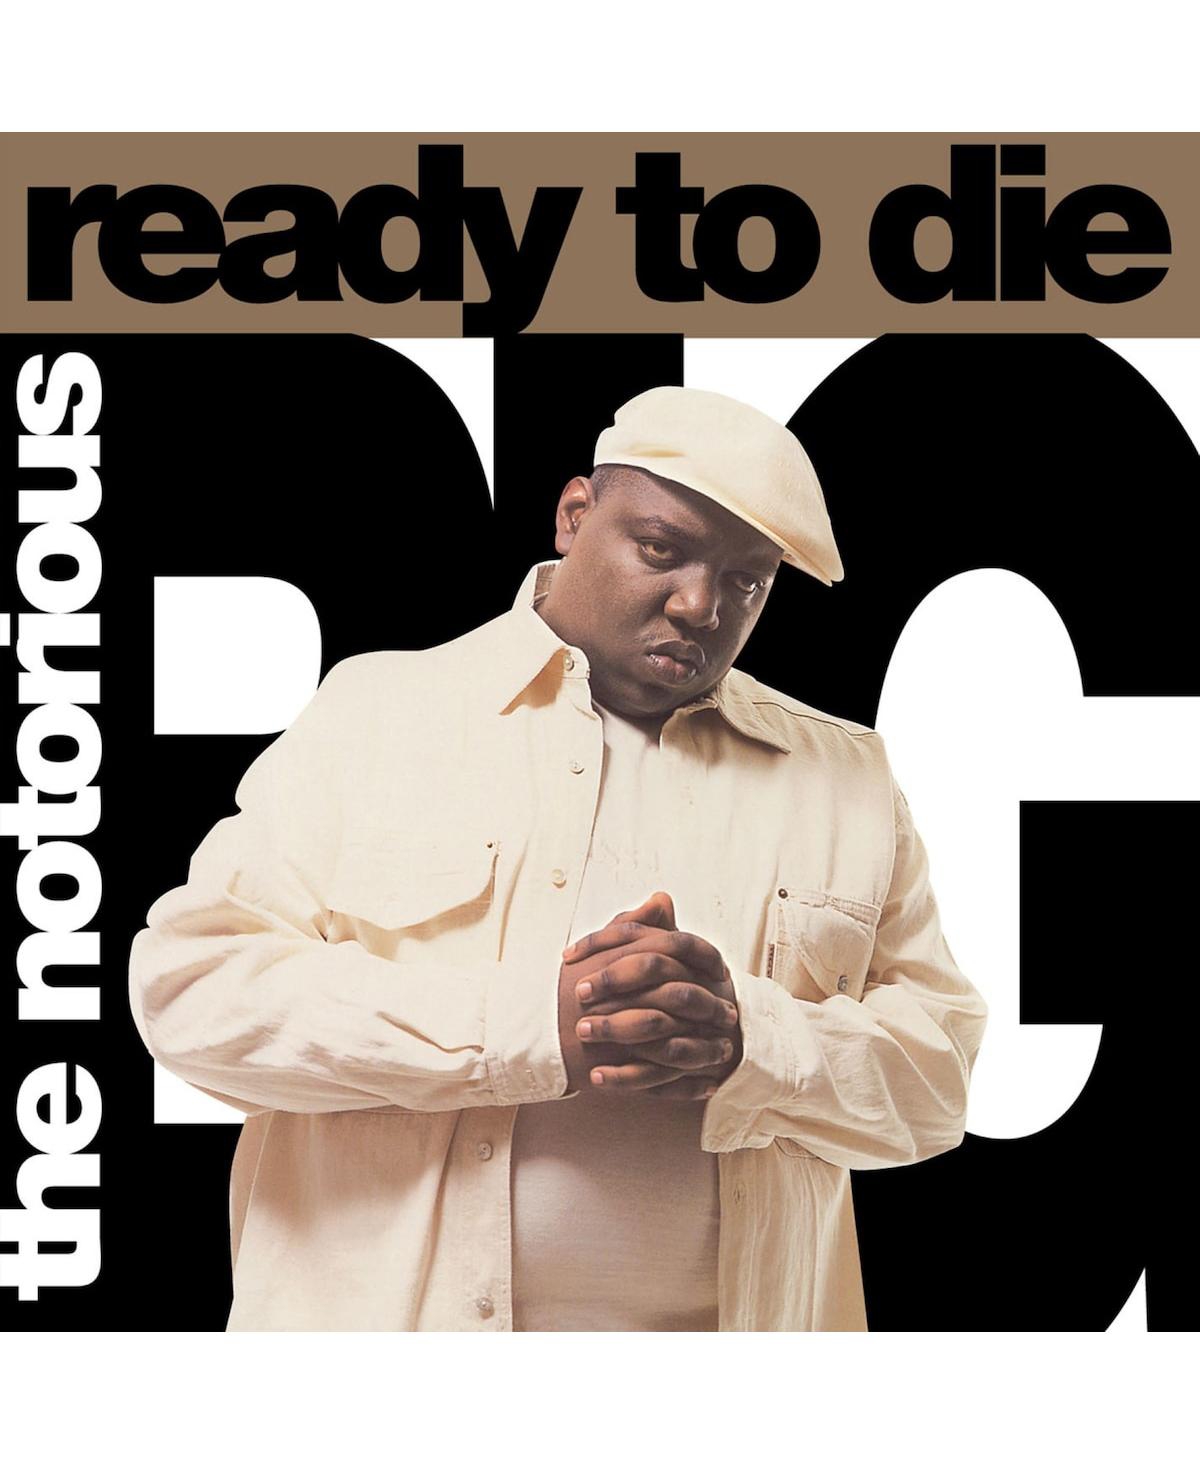 Notorious B.i.g. - Ready to Die Vinyl 2LP - Explicit - Multi